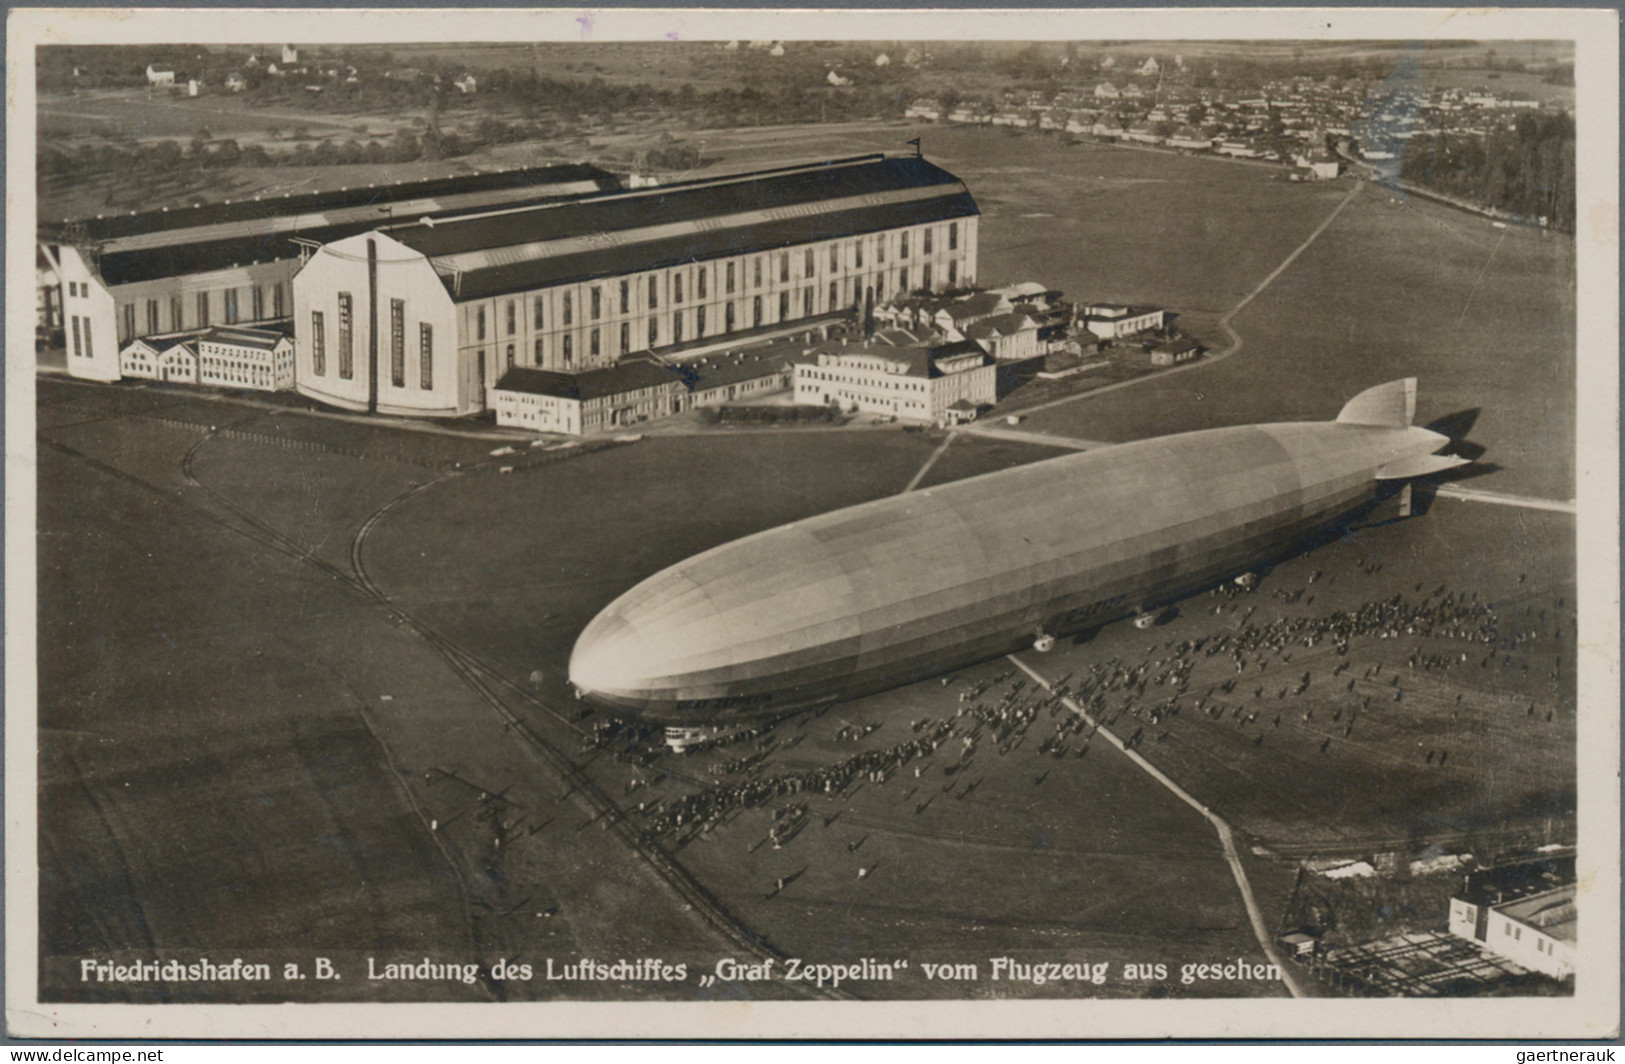 Zeppelin Mail - Germany: 1931 2 RM "POLAR FAHRT" Mit Aufdruckfehler "OHNE BINDES - Correo Aéreo & Zeppelin